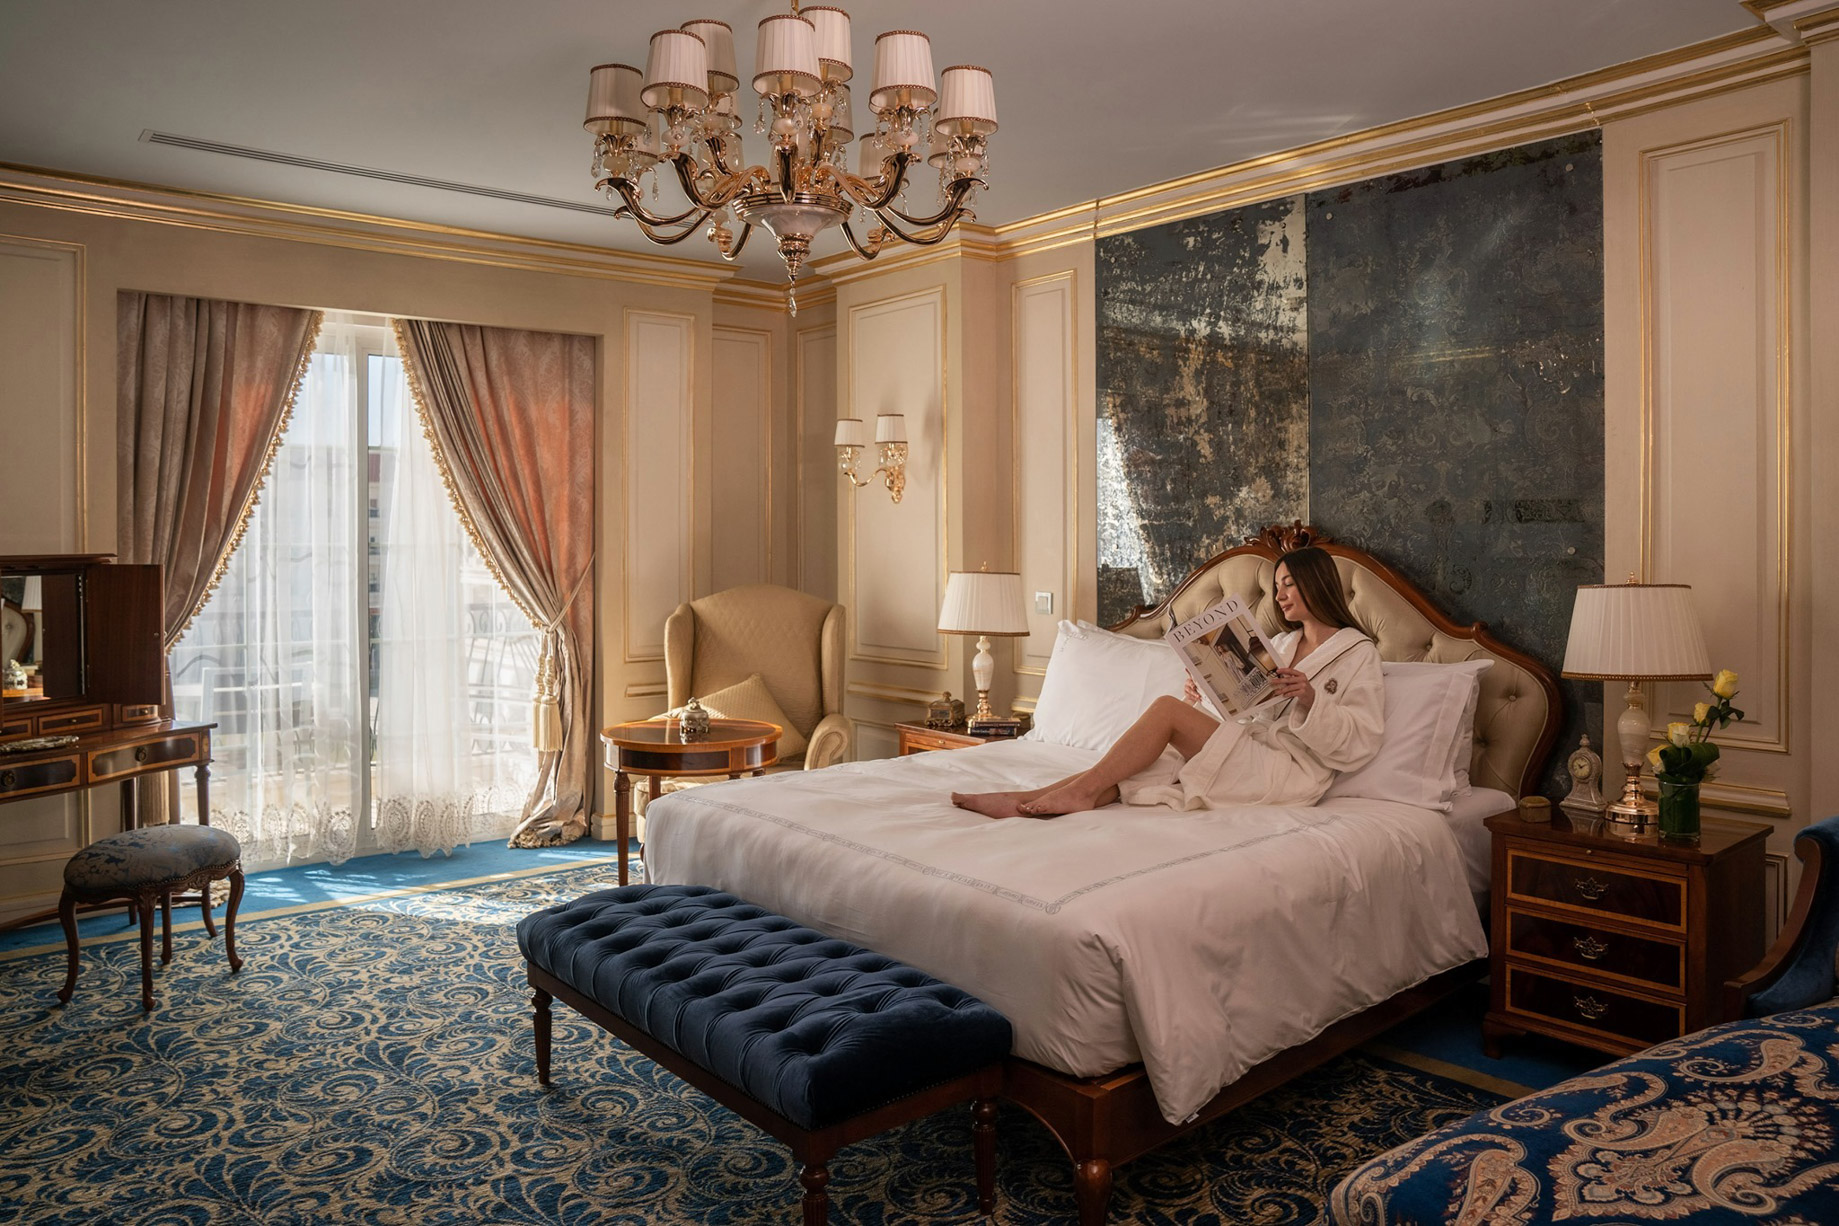 The St. Regis Almasa Hotel – Cairo, Egypt – Luxurious Rooms